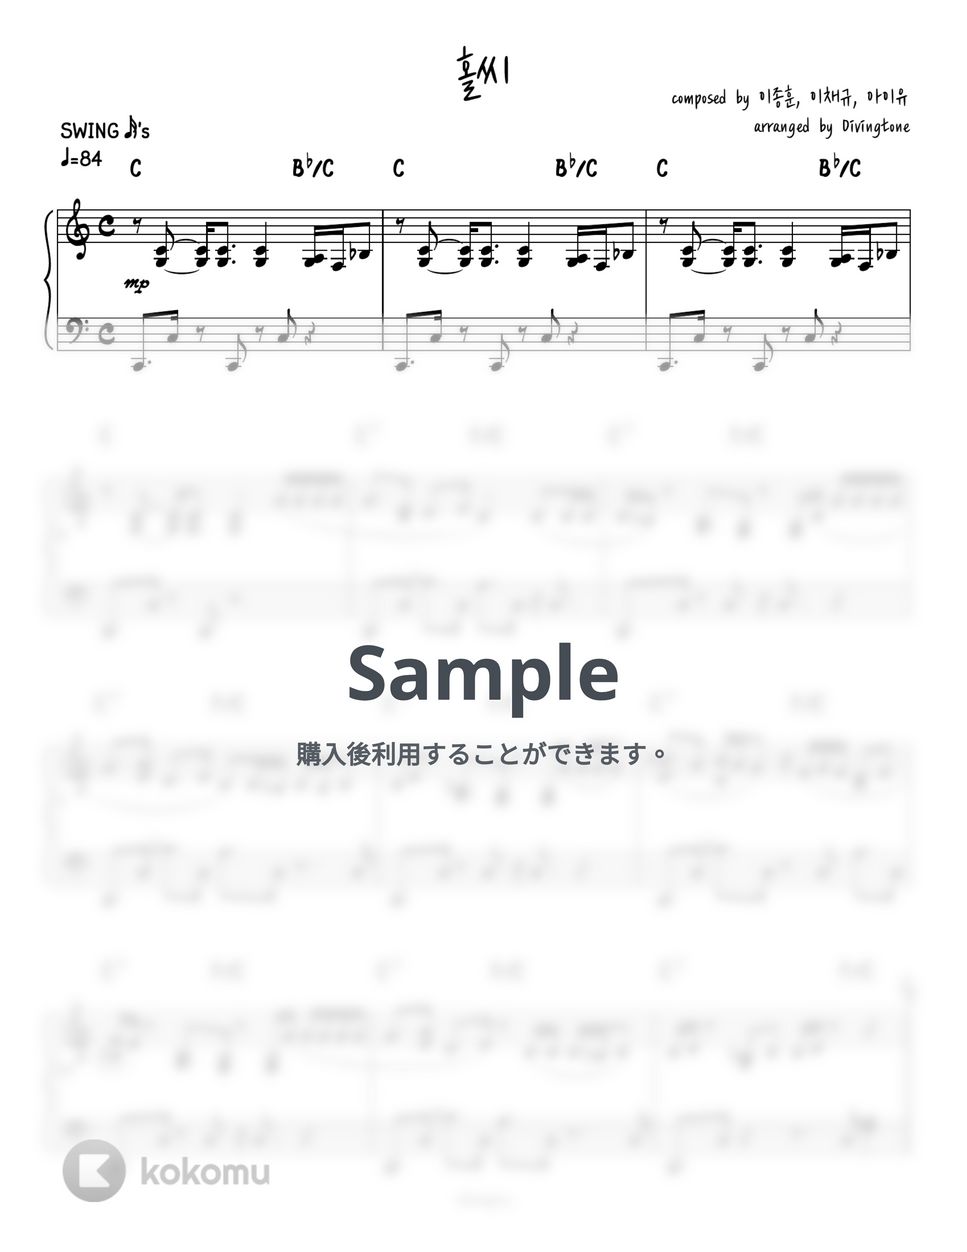 IU - Holssi (Piano Sheet) by Divingtone